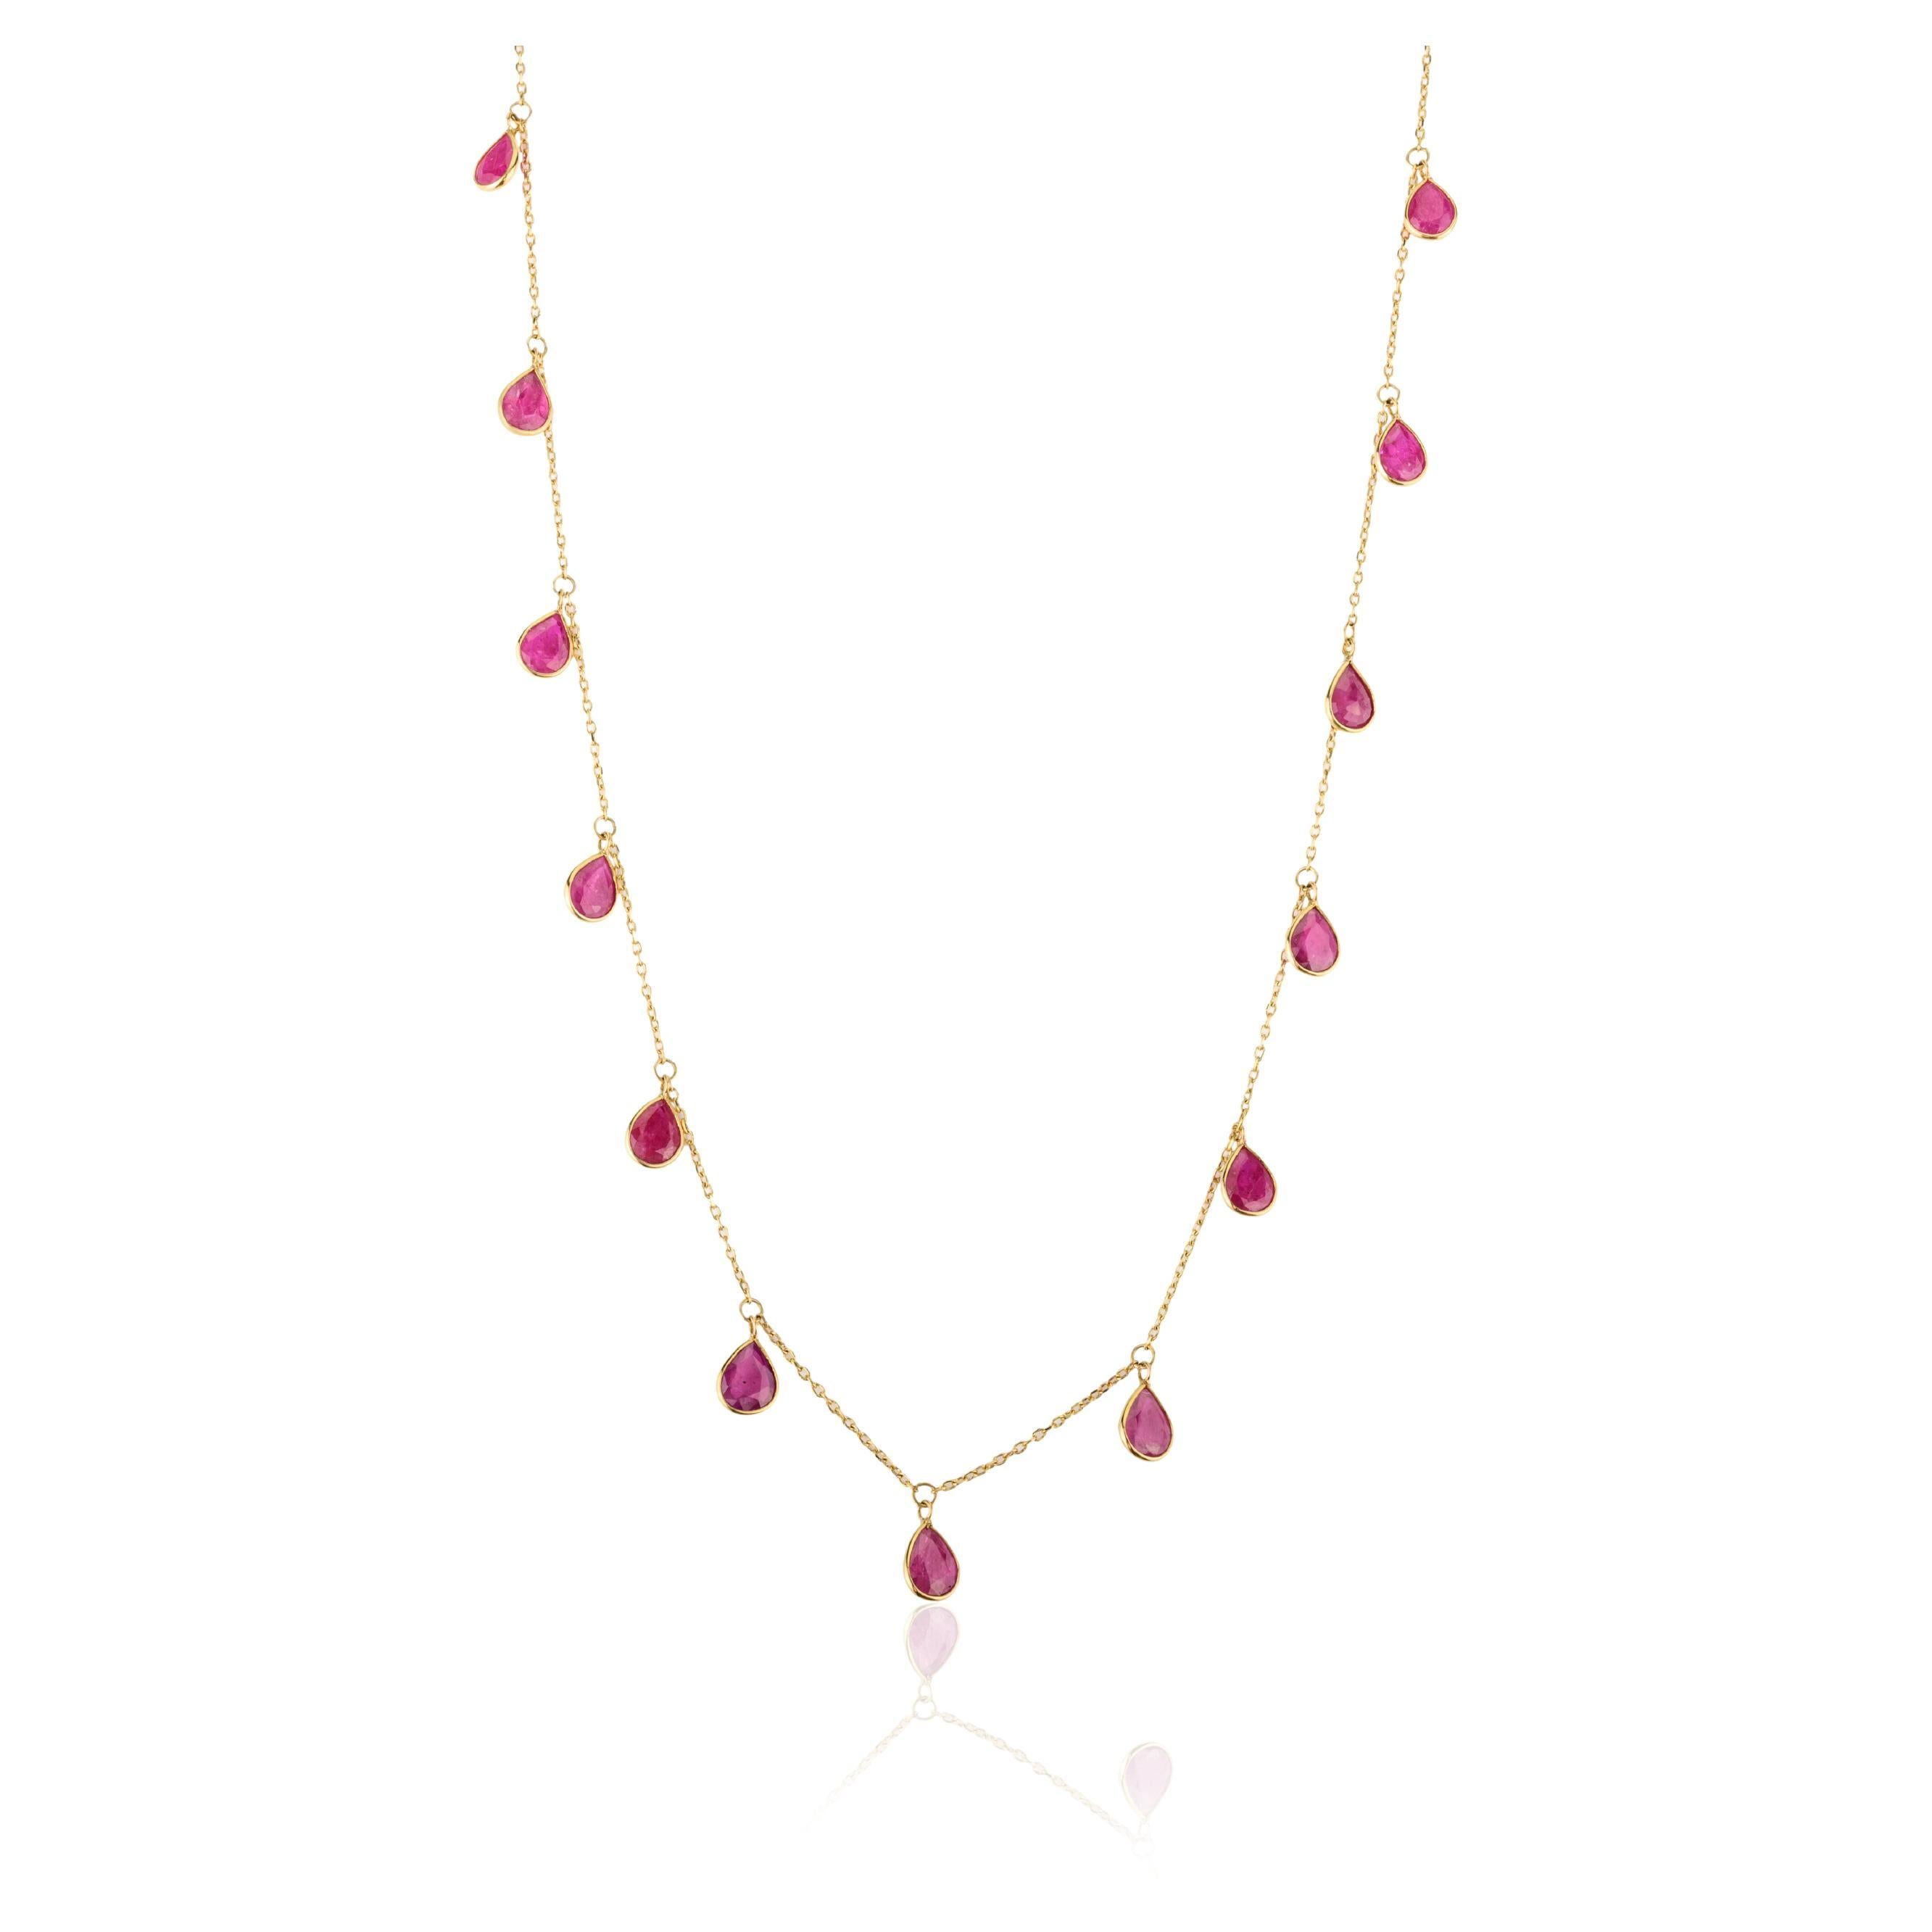 Pear Bezel Set Ruby Fringe Necklace in 18 Karat Yellow Gold Gift for Women